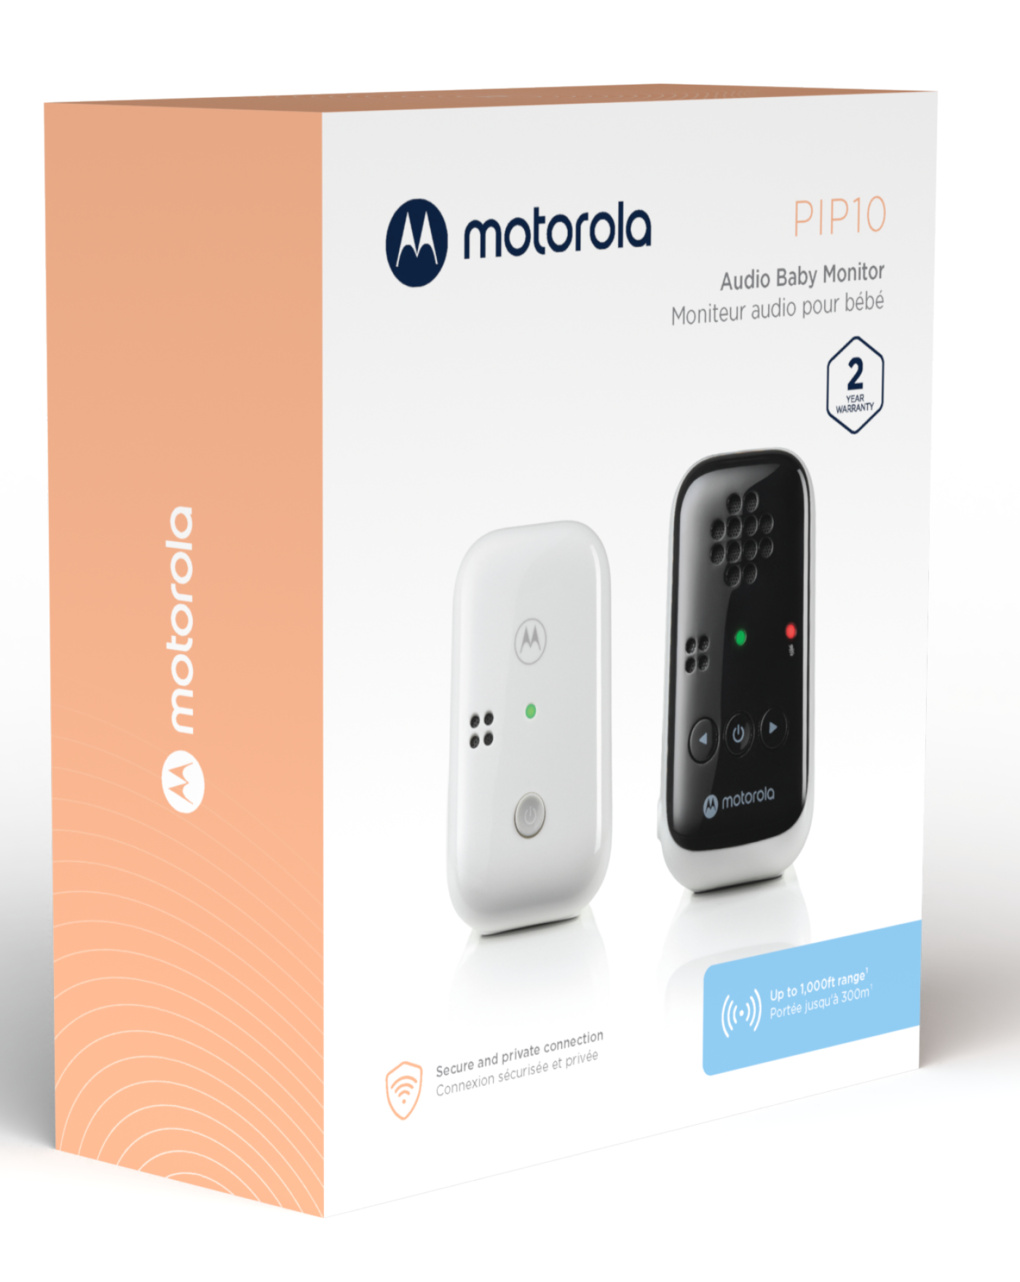 Baby monitor pip 10 - motorola - Motorola